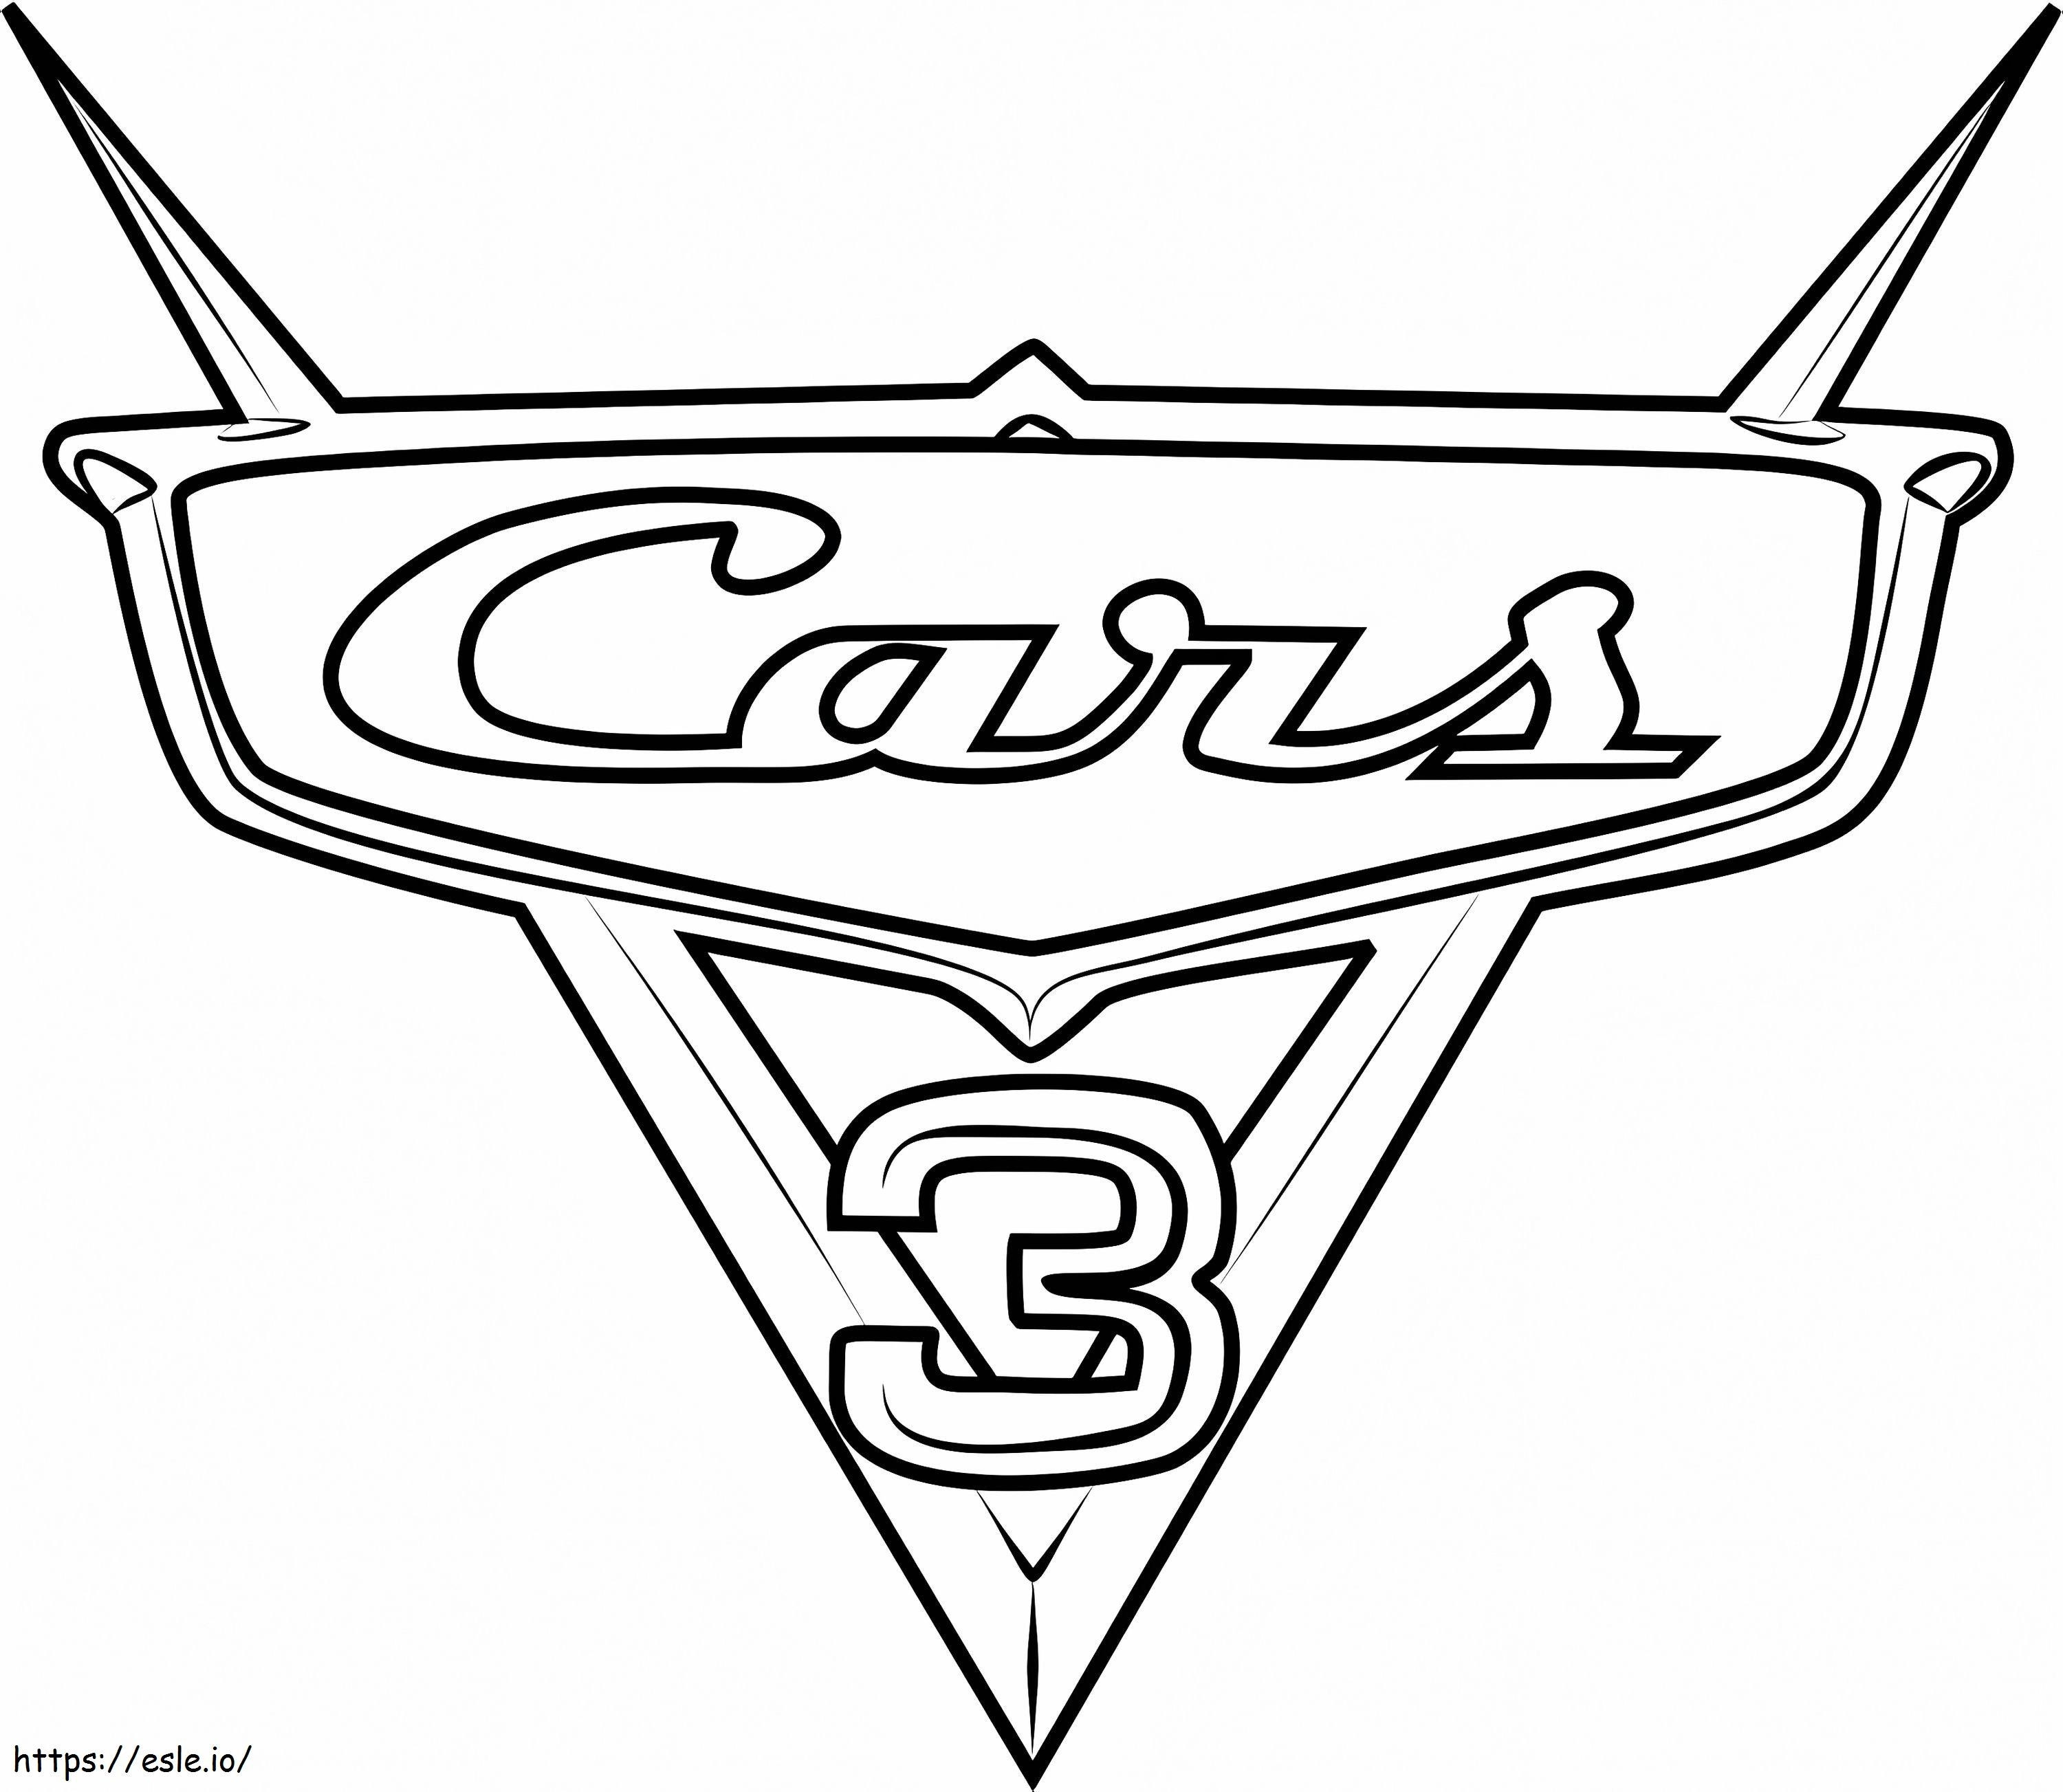  Cars 3 Logo di Cars 31 da colorare